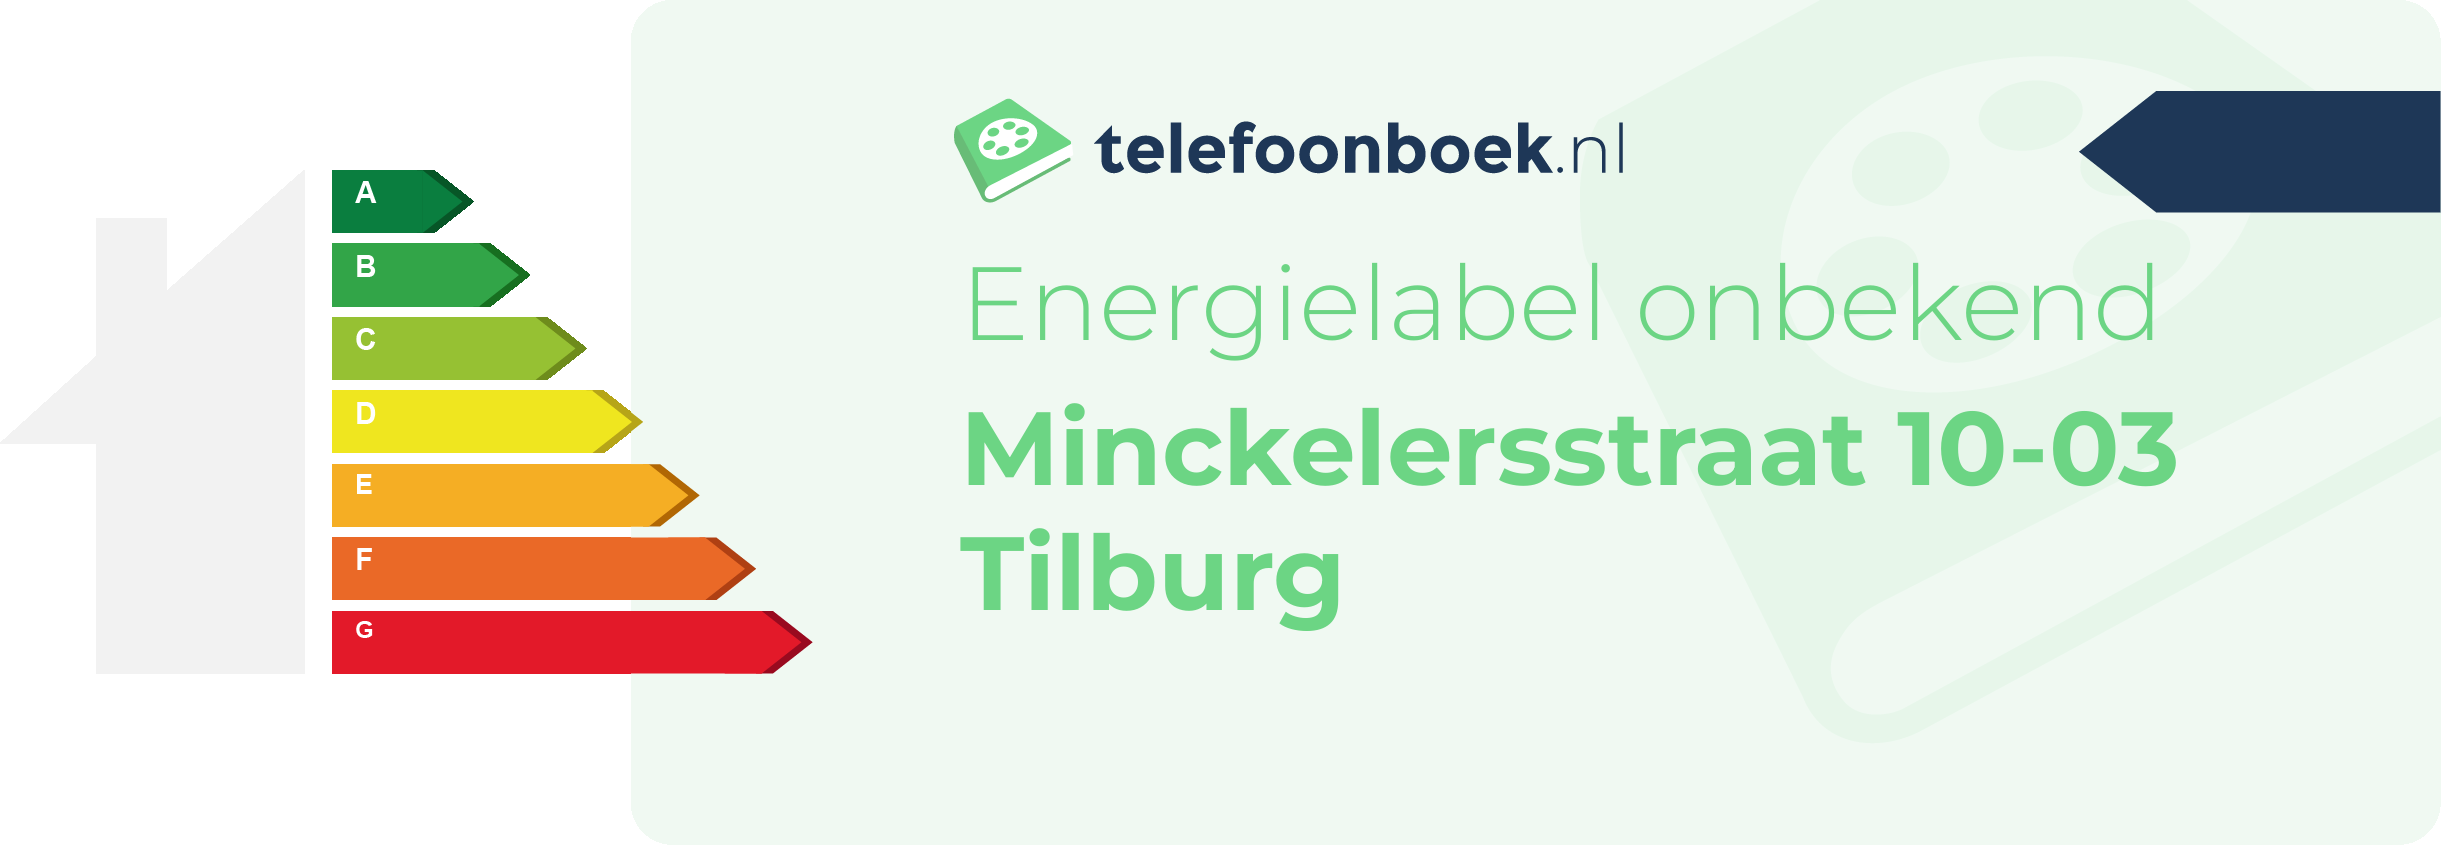 Energielabel Minckelersstraat 10-03 Tilburg